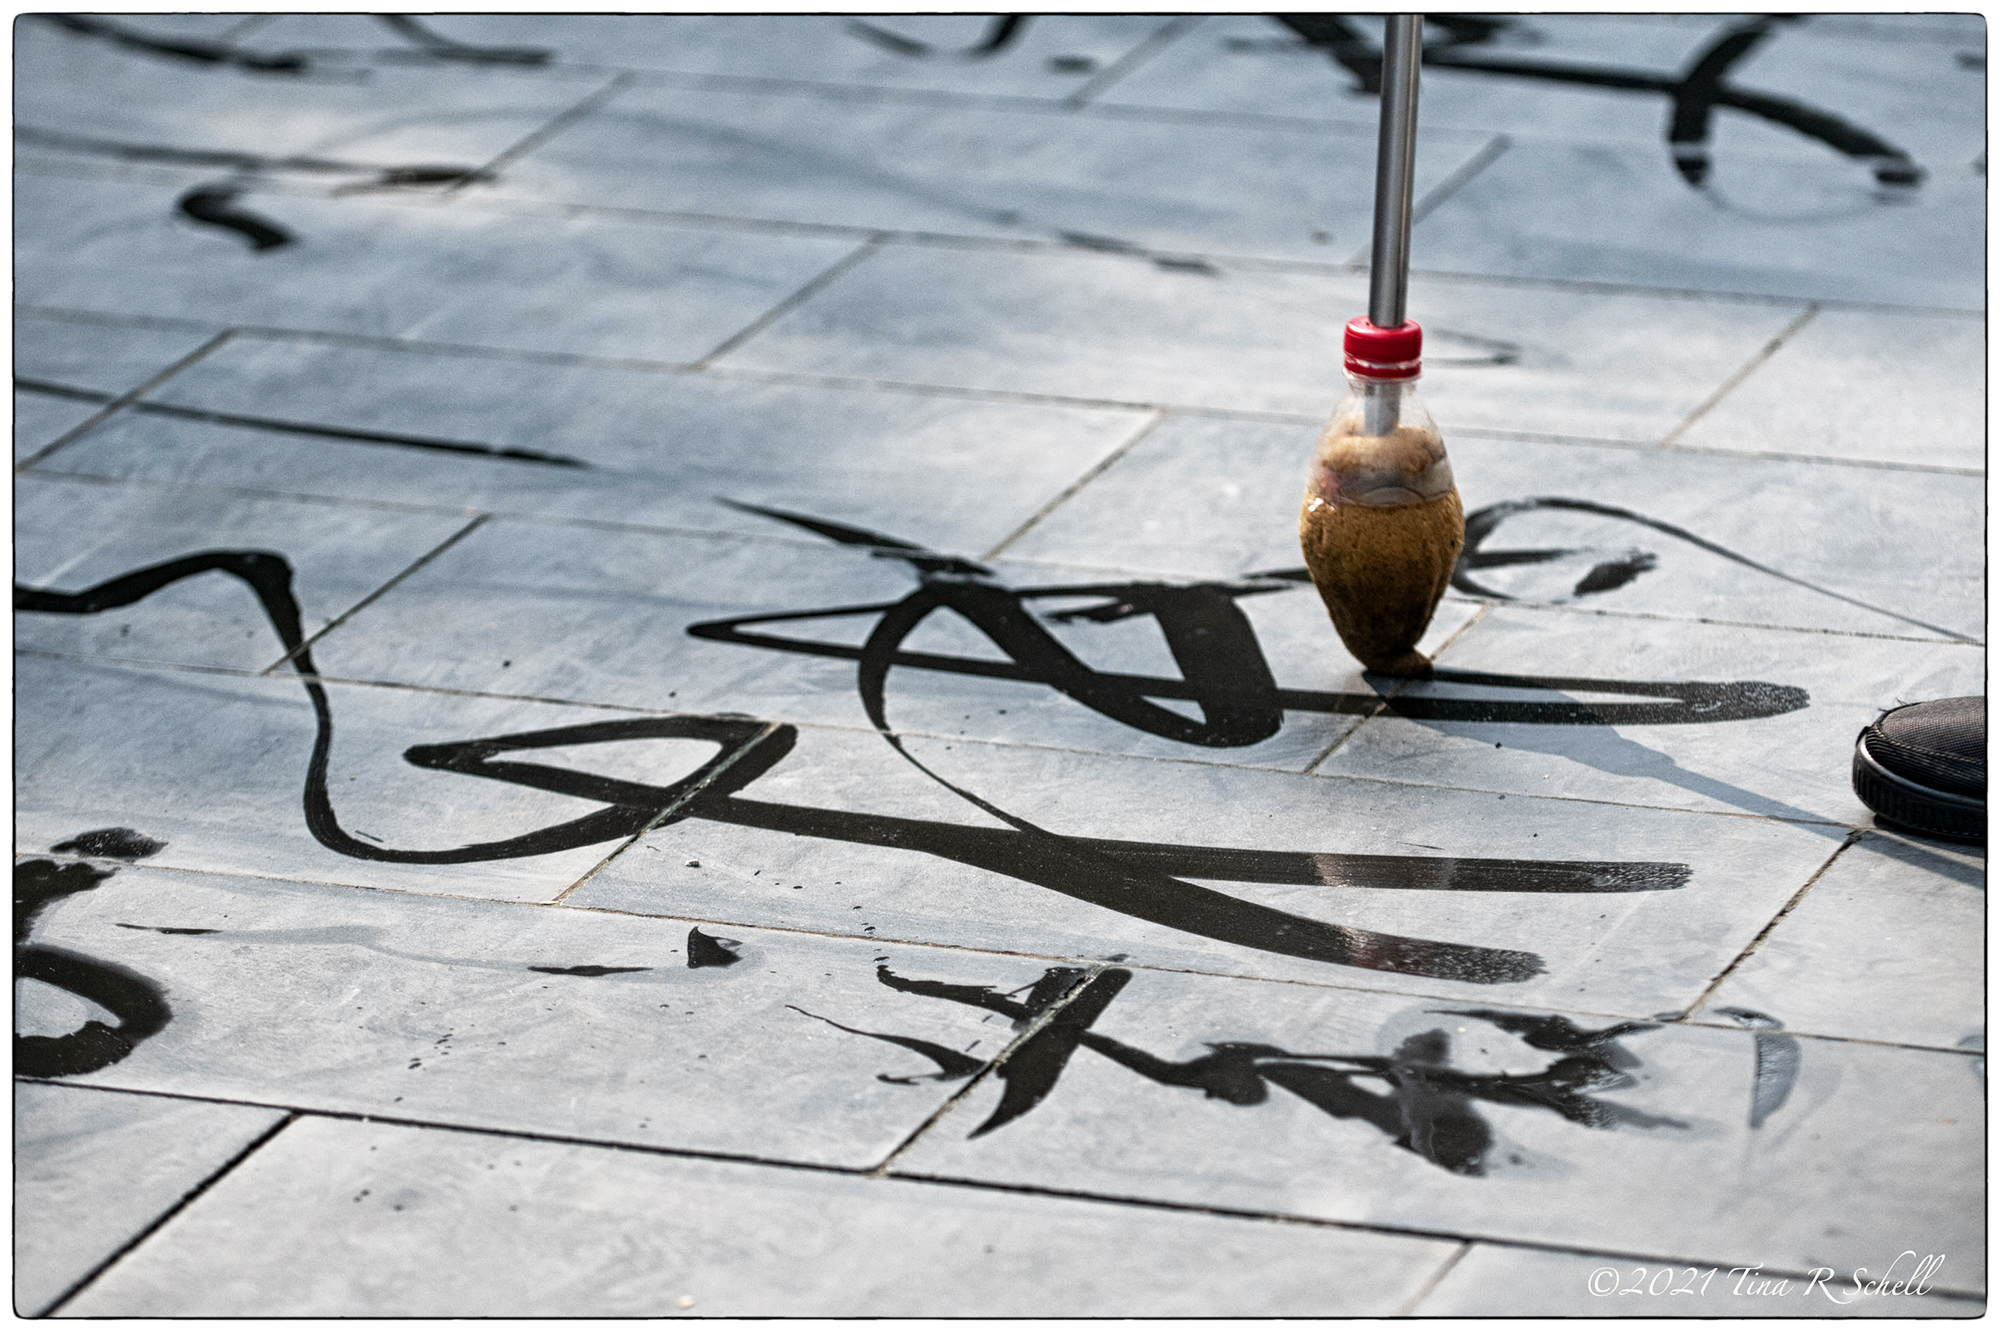 Chinese, script, paint, sidewalk